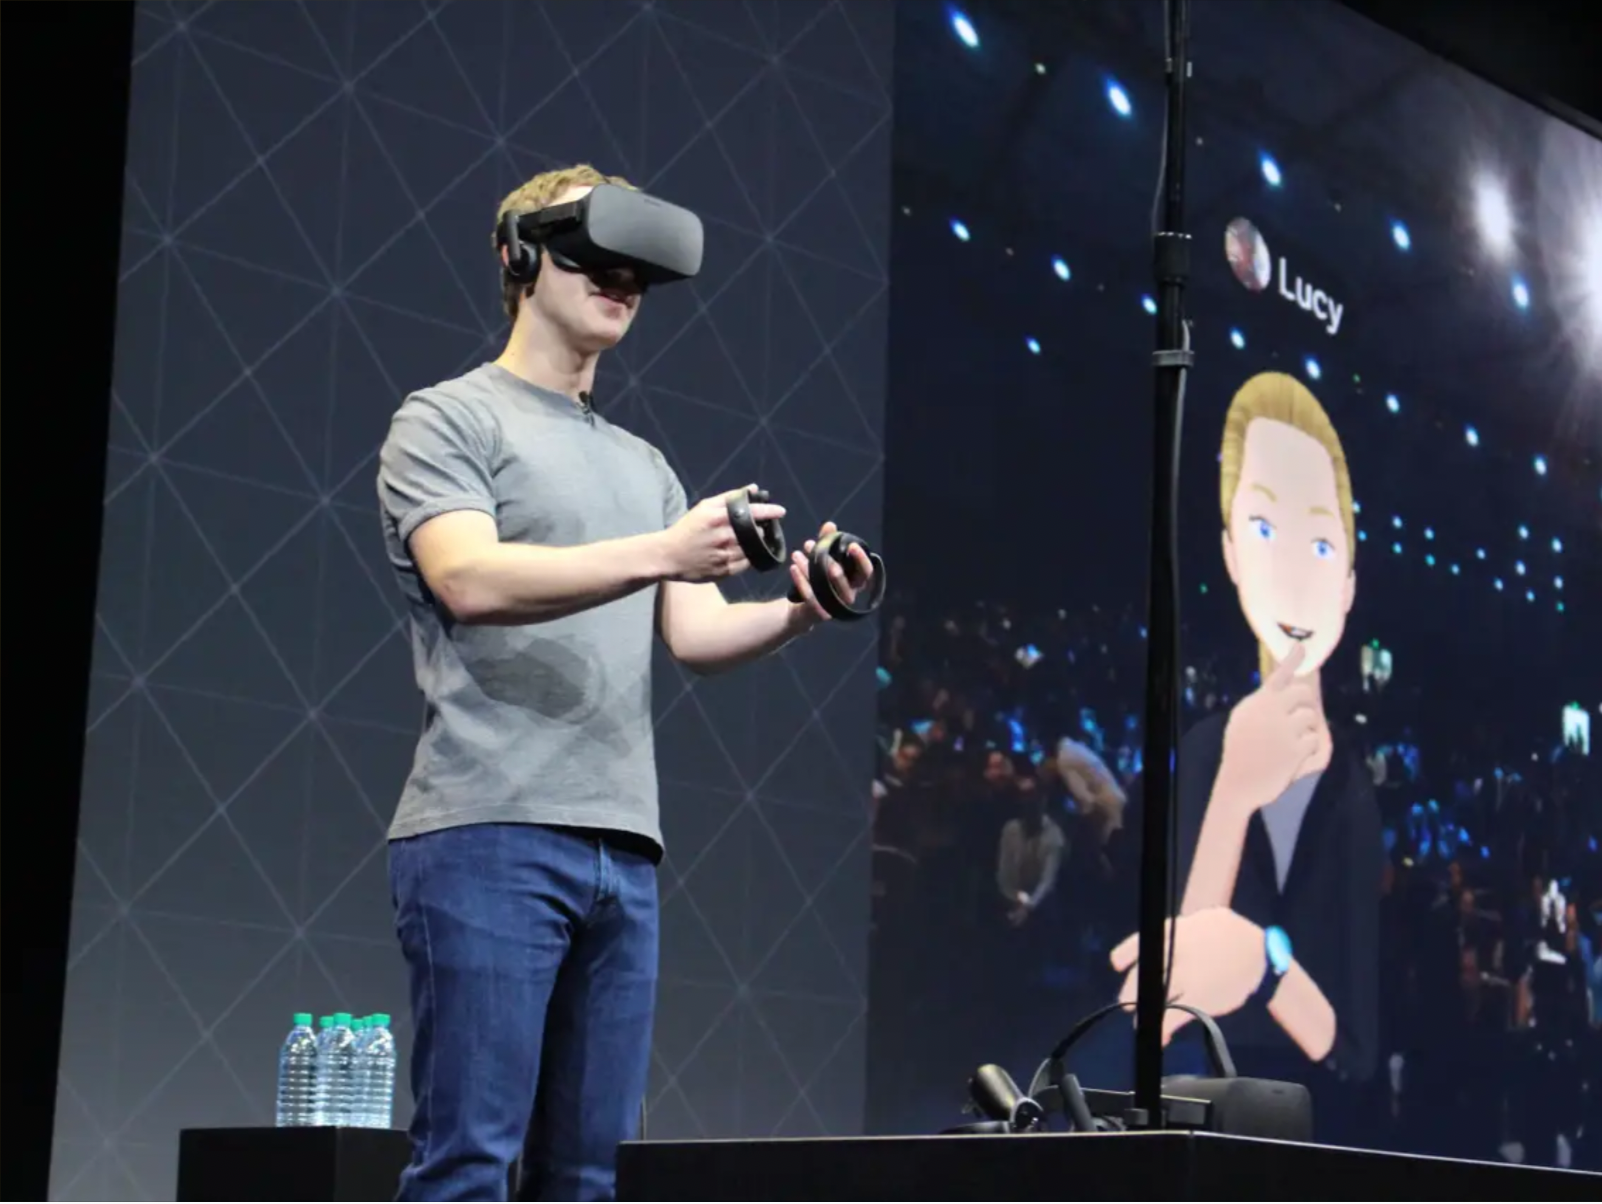 Mark Zuckerberg VR Headset